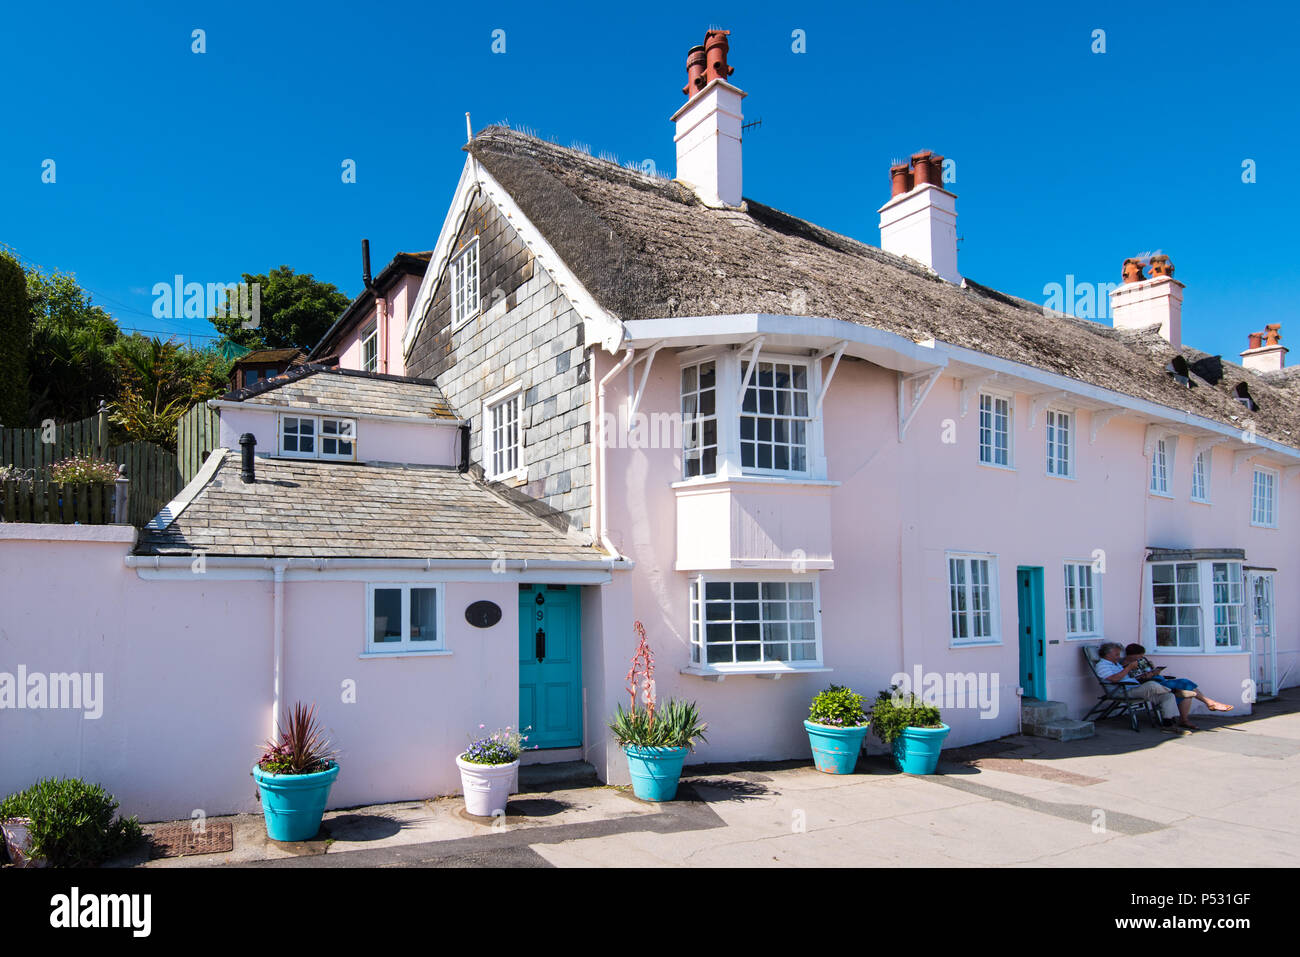 LyME REGIS, DORSET, UK, 14JUN2018: Pink thatched cottage on the seafront at Lyme Regis. Stock Photo